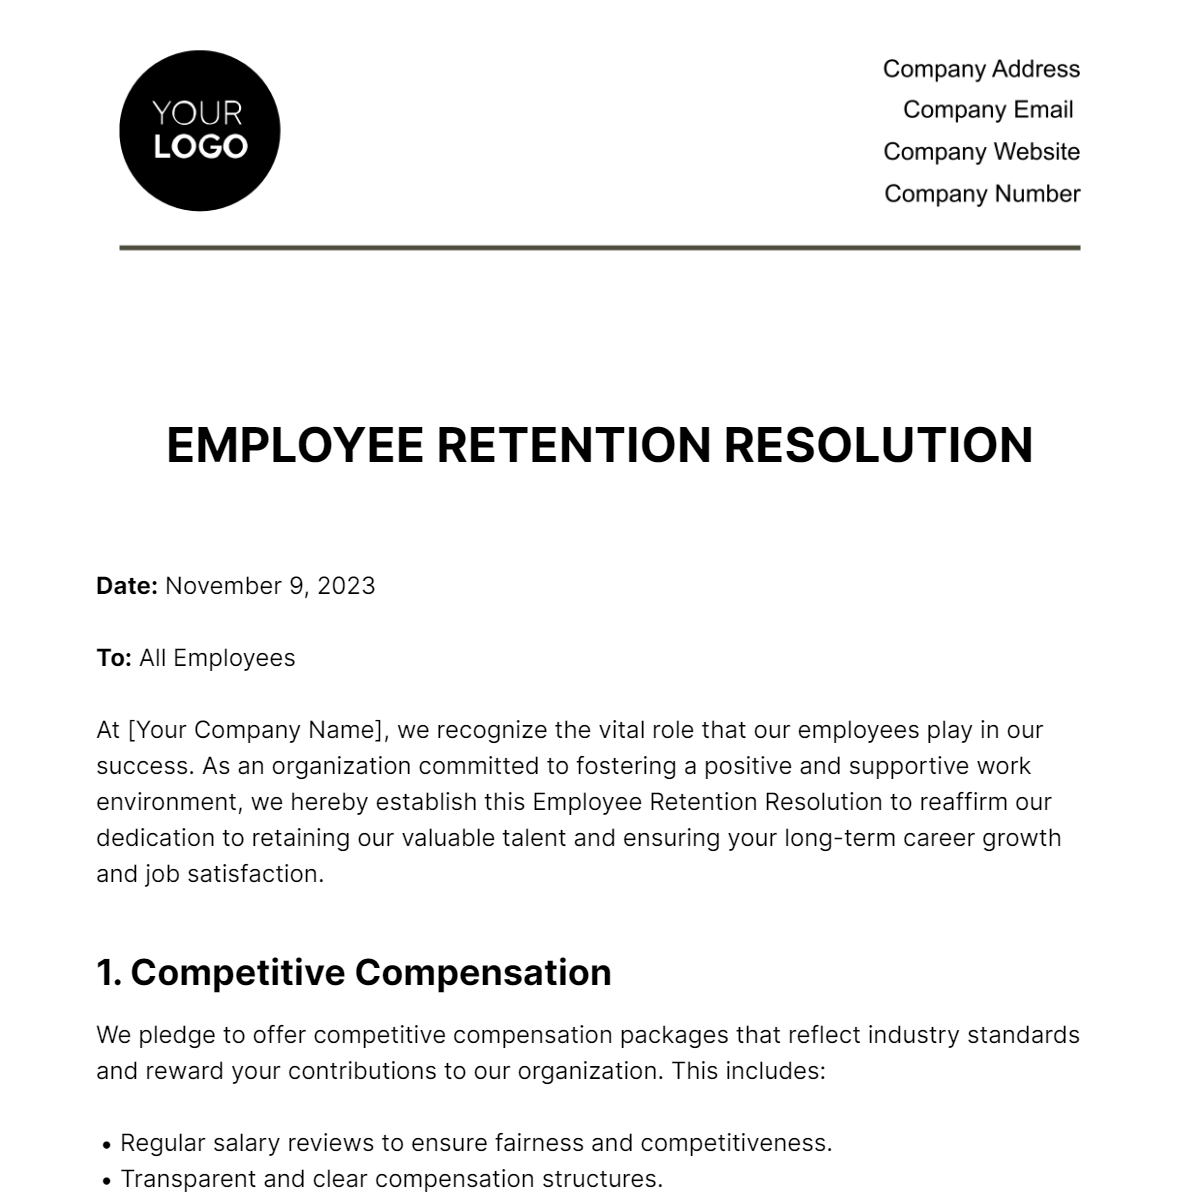 Employee Retention Resolution HR Template